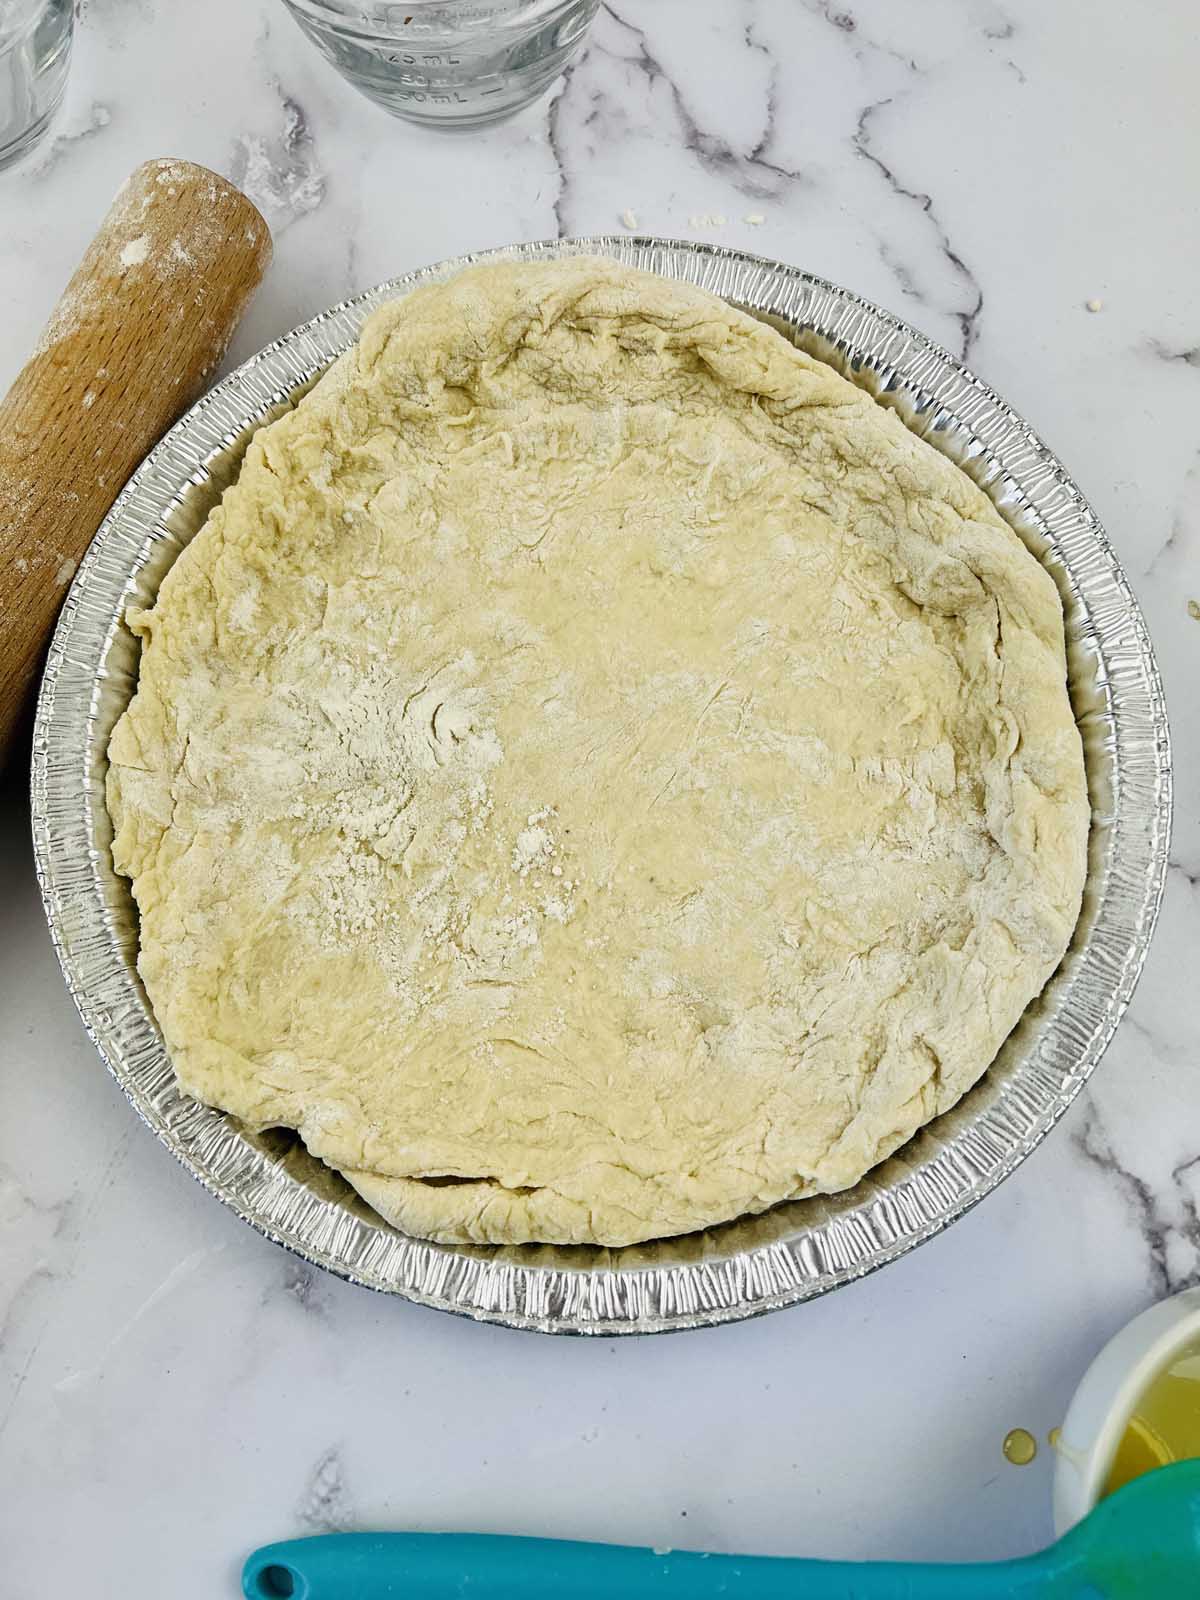 The pie dough spread out into a pie tin.